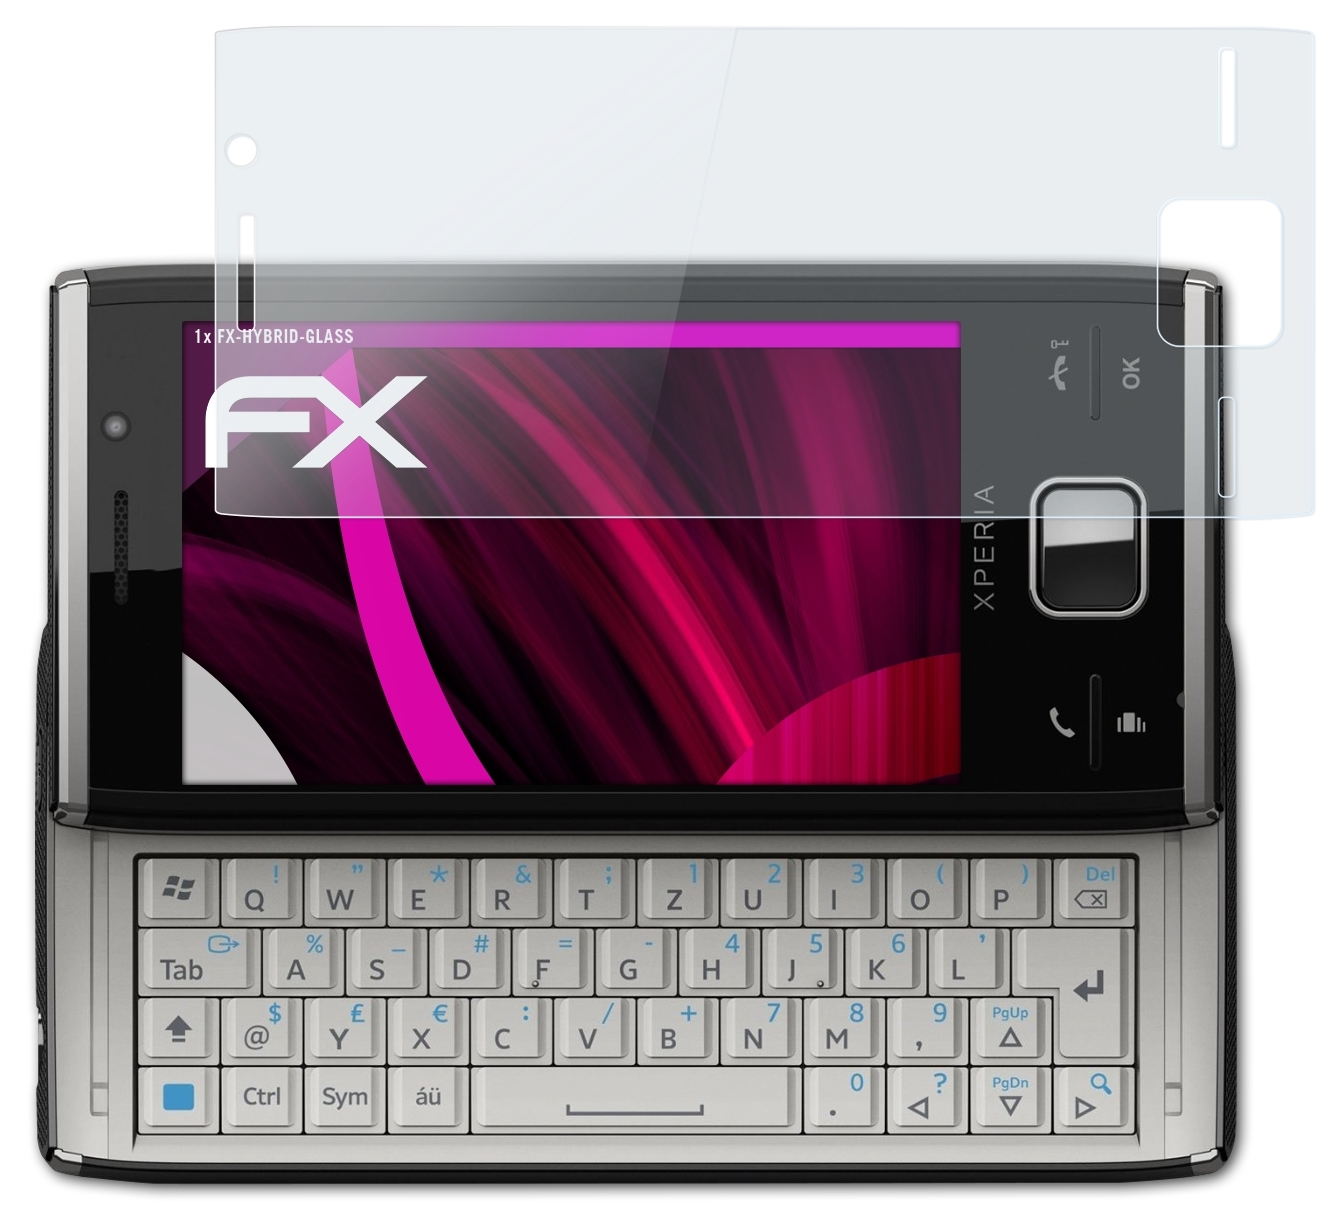 X2) Xperia ATFOLIX Sony-Ericsson Schutzglas(für FX-Hybrid-Glass